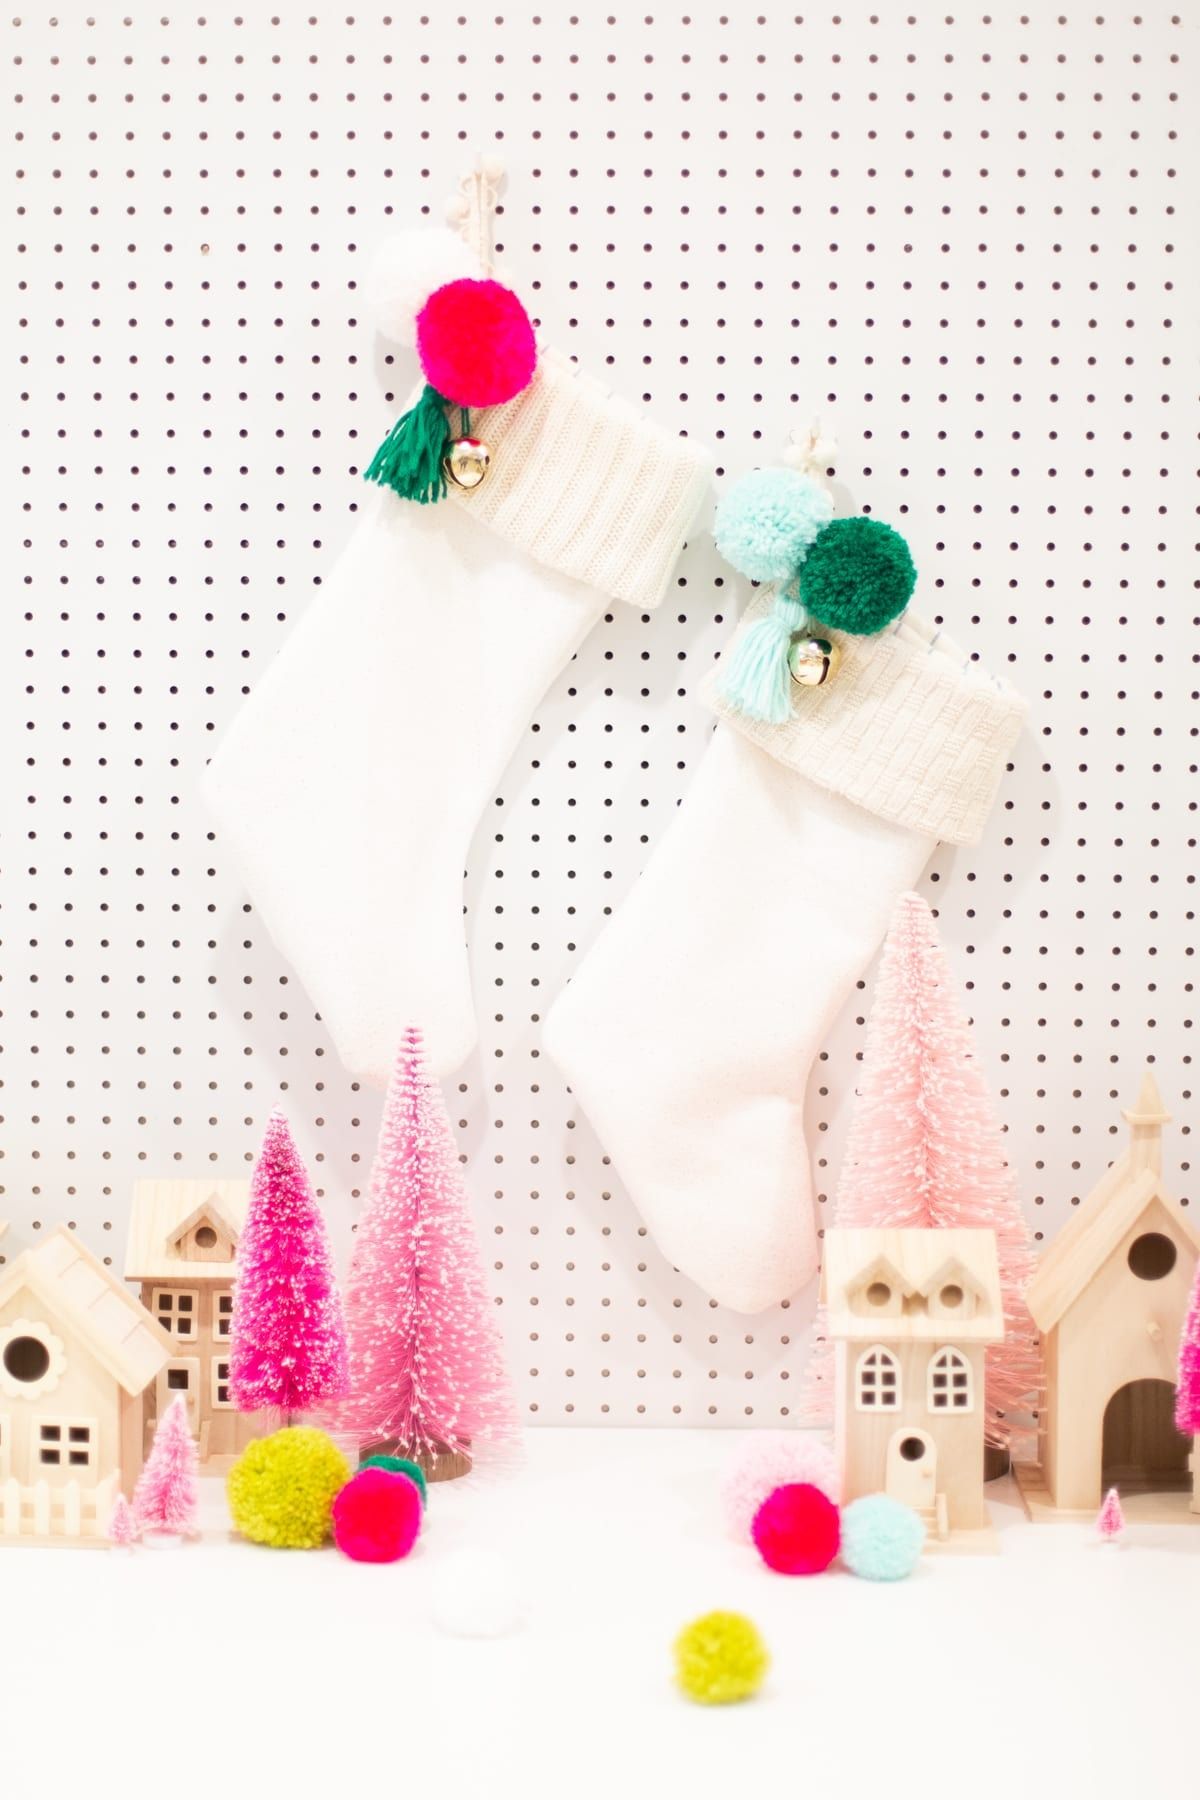 How to Make a DIY Christmas Stocking